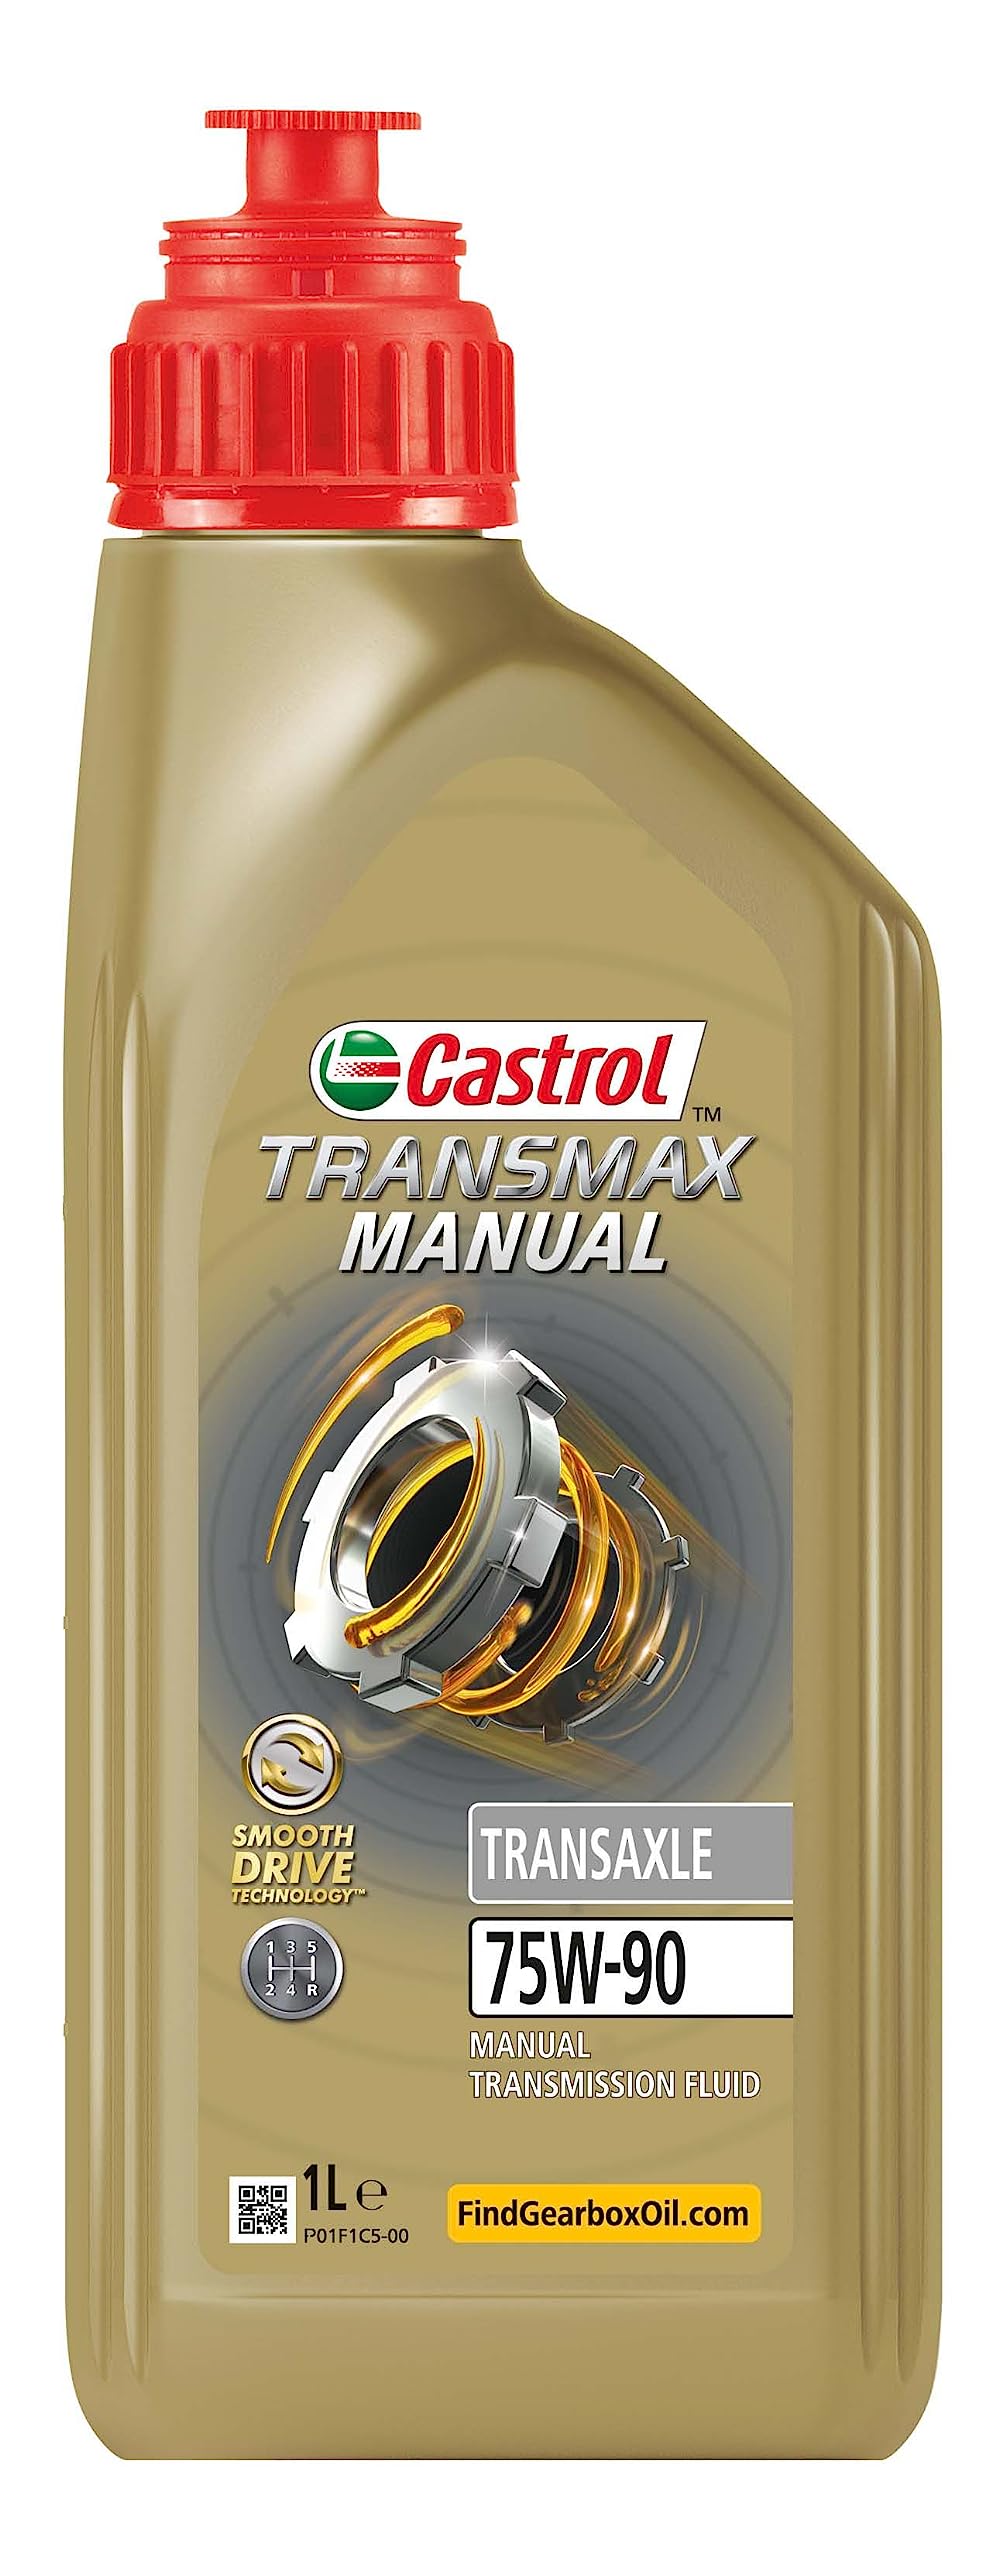 Castrol TRANSMAX Manual Transaxle 75W-90 Getriebeöl, 1L von Castrol